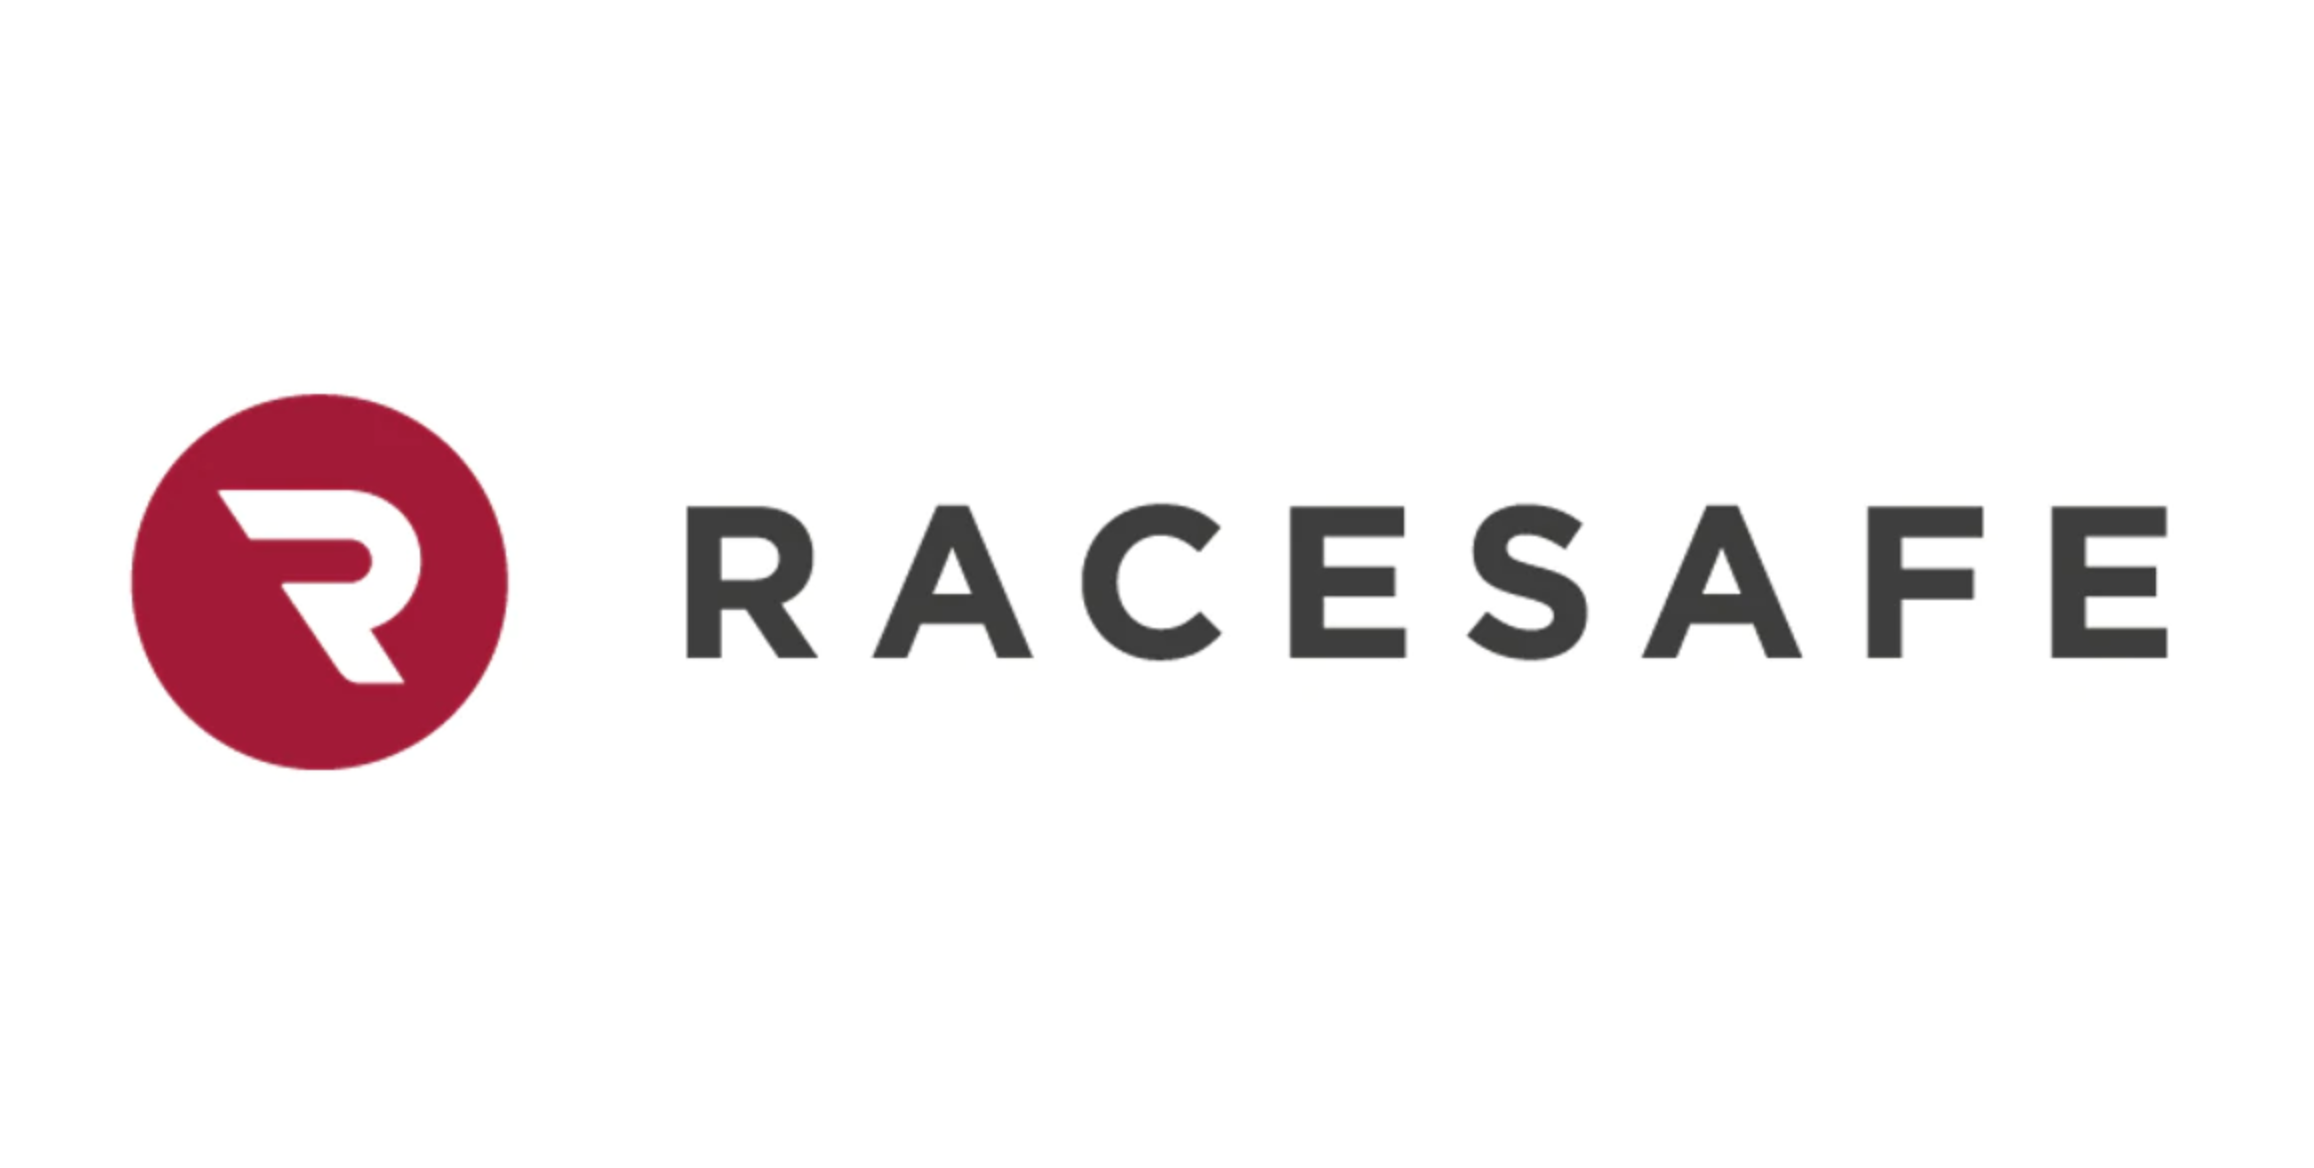 Racesafe